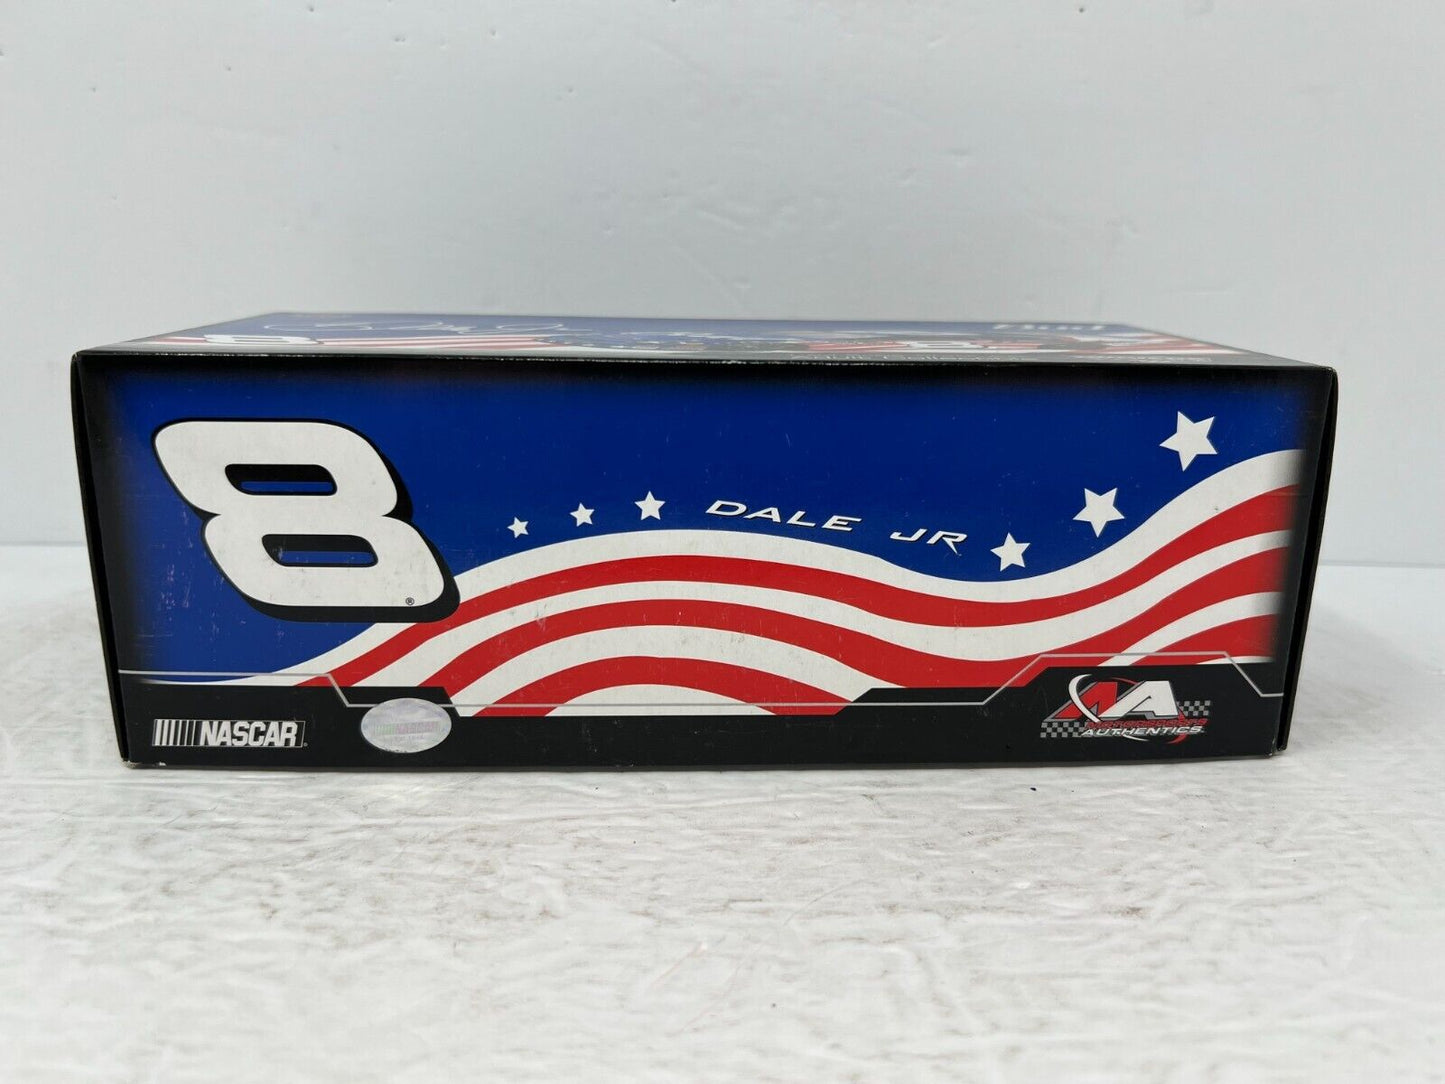 Motorsports Authentics #8 Dale Earnhardt Jr. Bud Stars and Stripes 1:24 Diecast